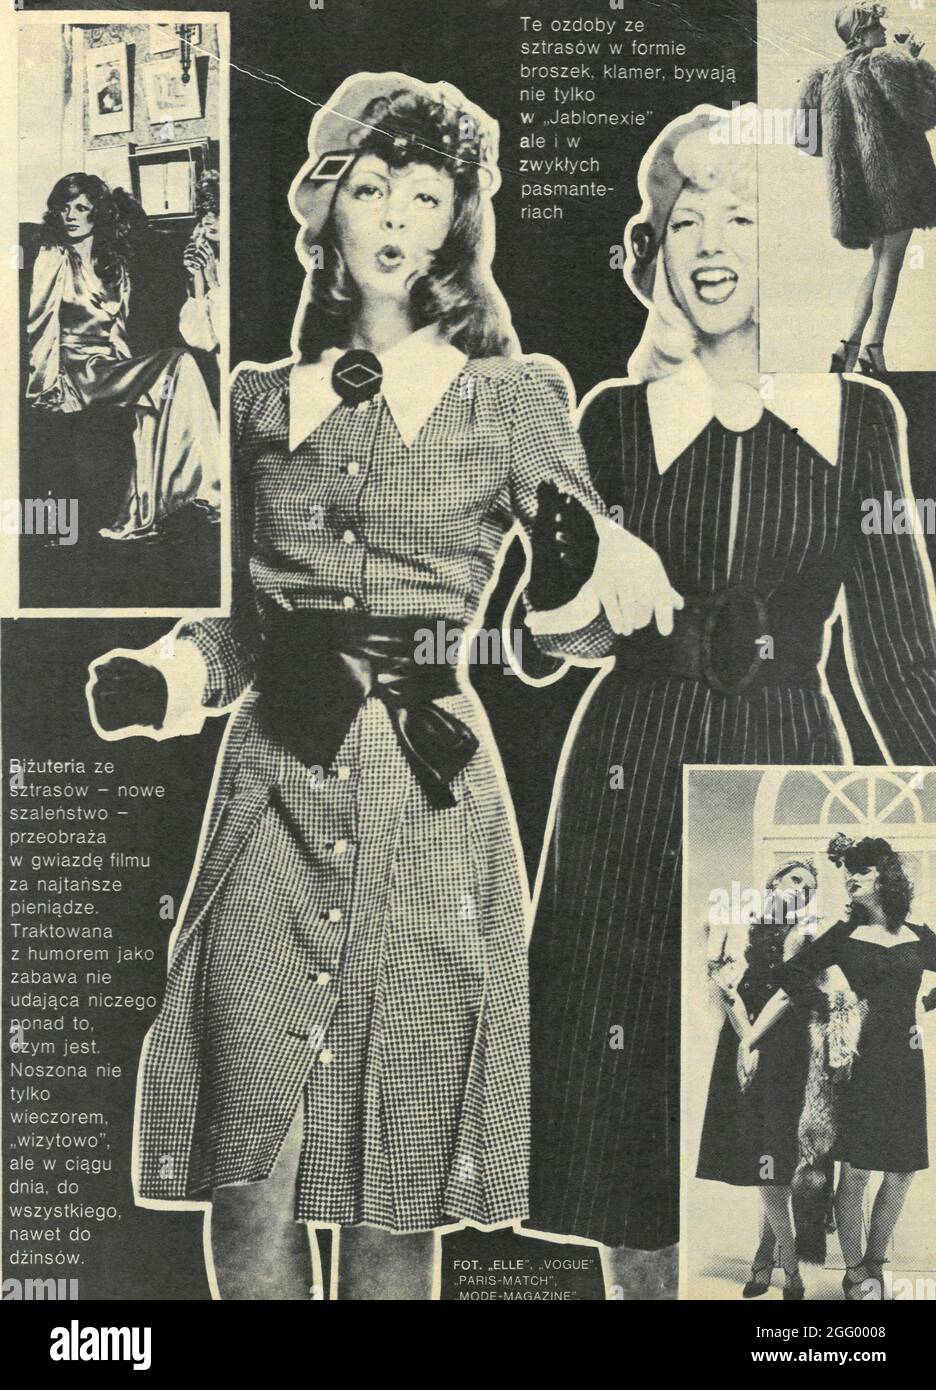 Fotografía de moda vintage foto retro collage recorte 1960s 1970s zdjęcie modowe vintage wycinek z gazety centrofold Foto de stock